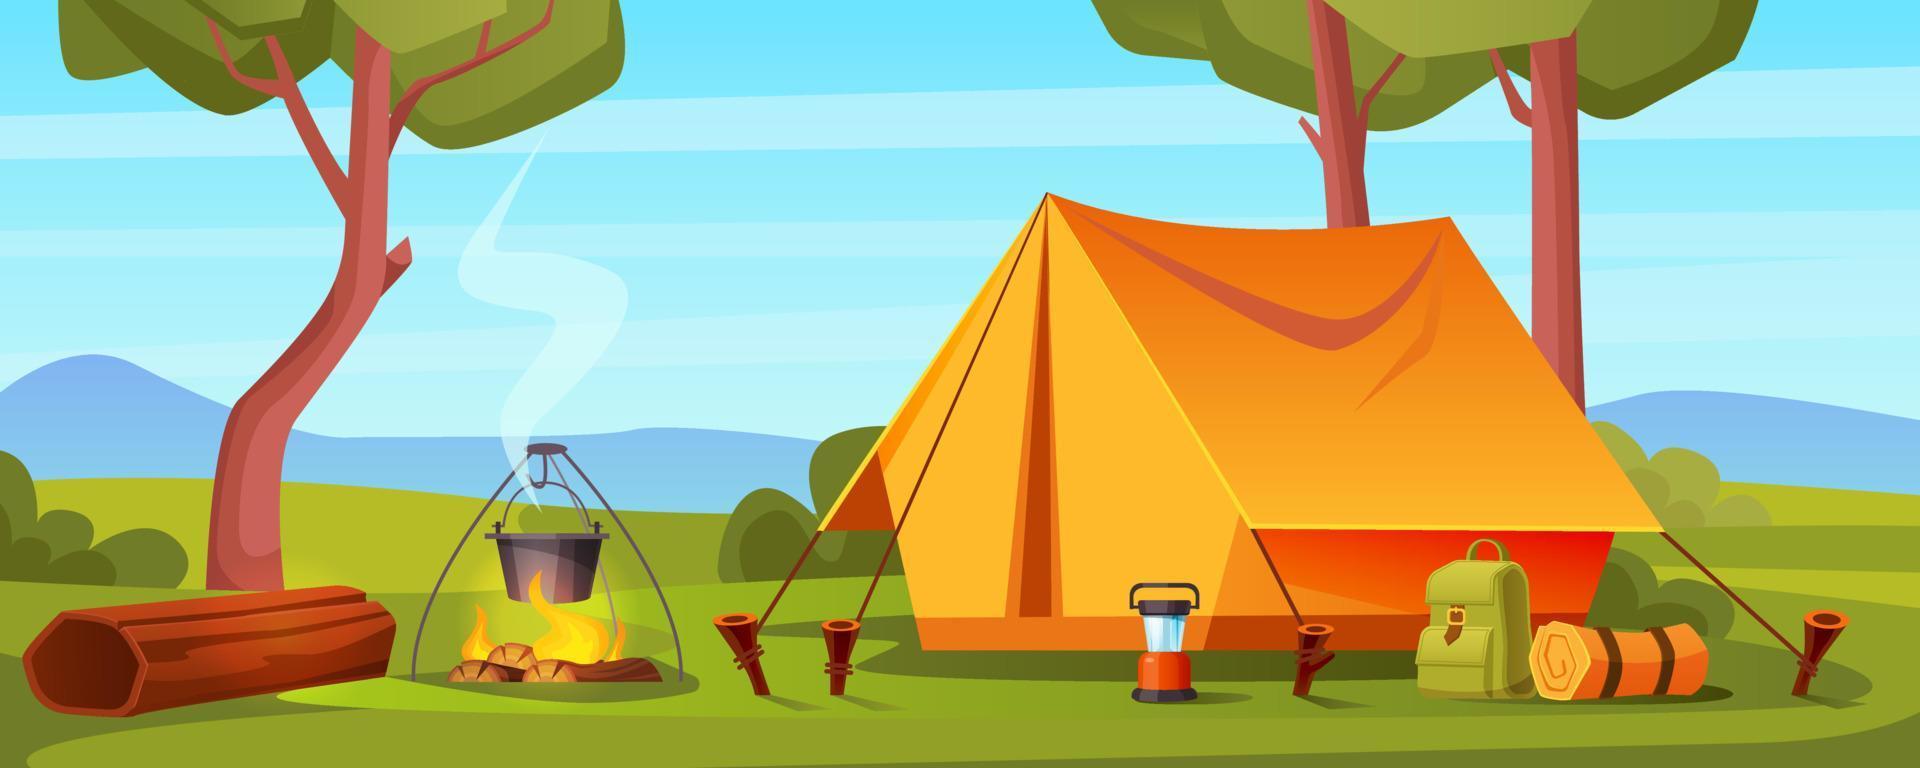 zomer kamp in Woud met vreugdevuur, tent, rugzak vector